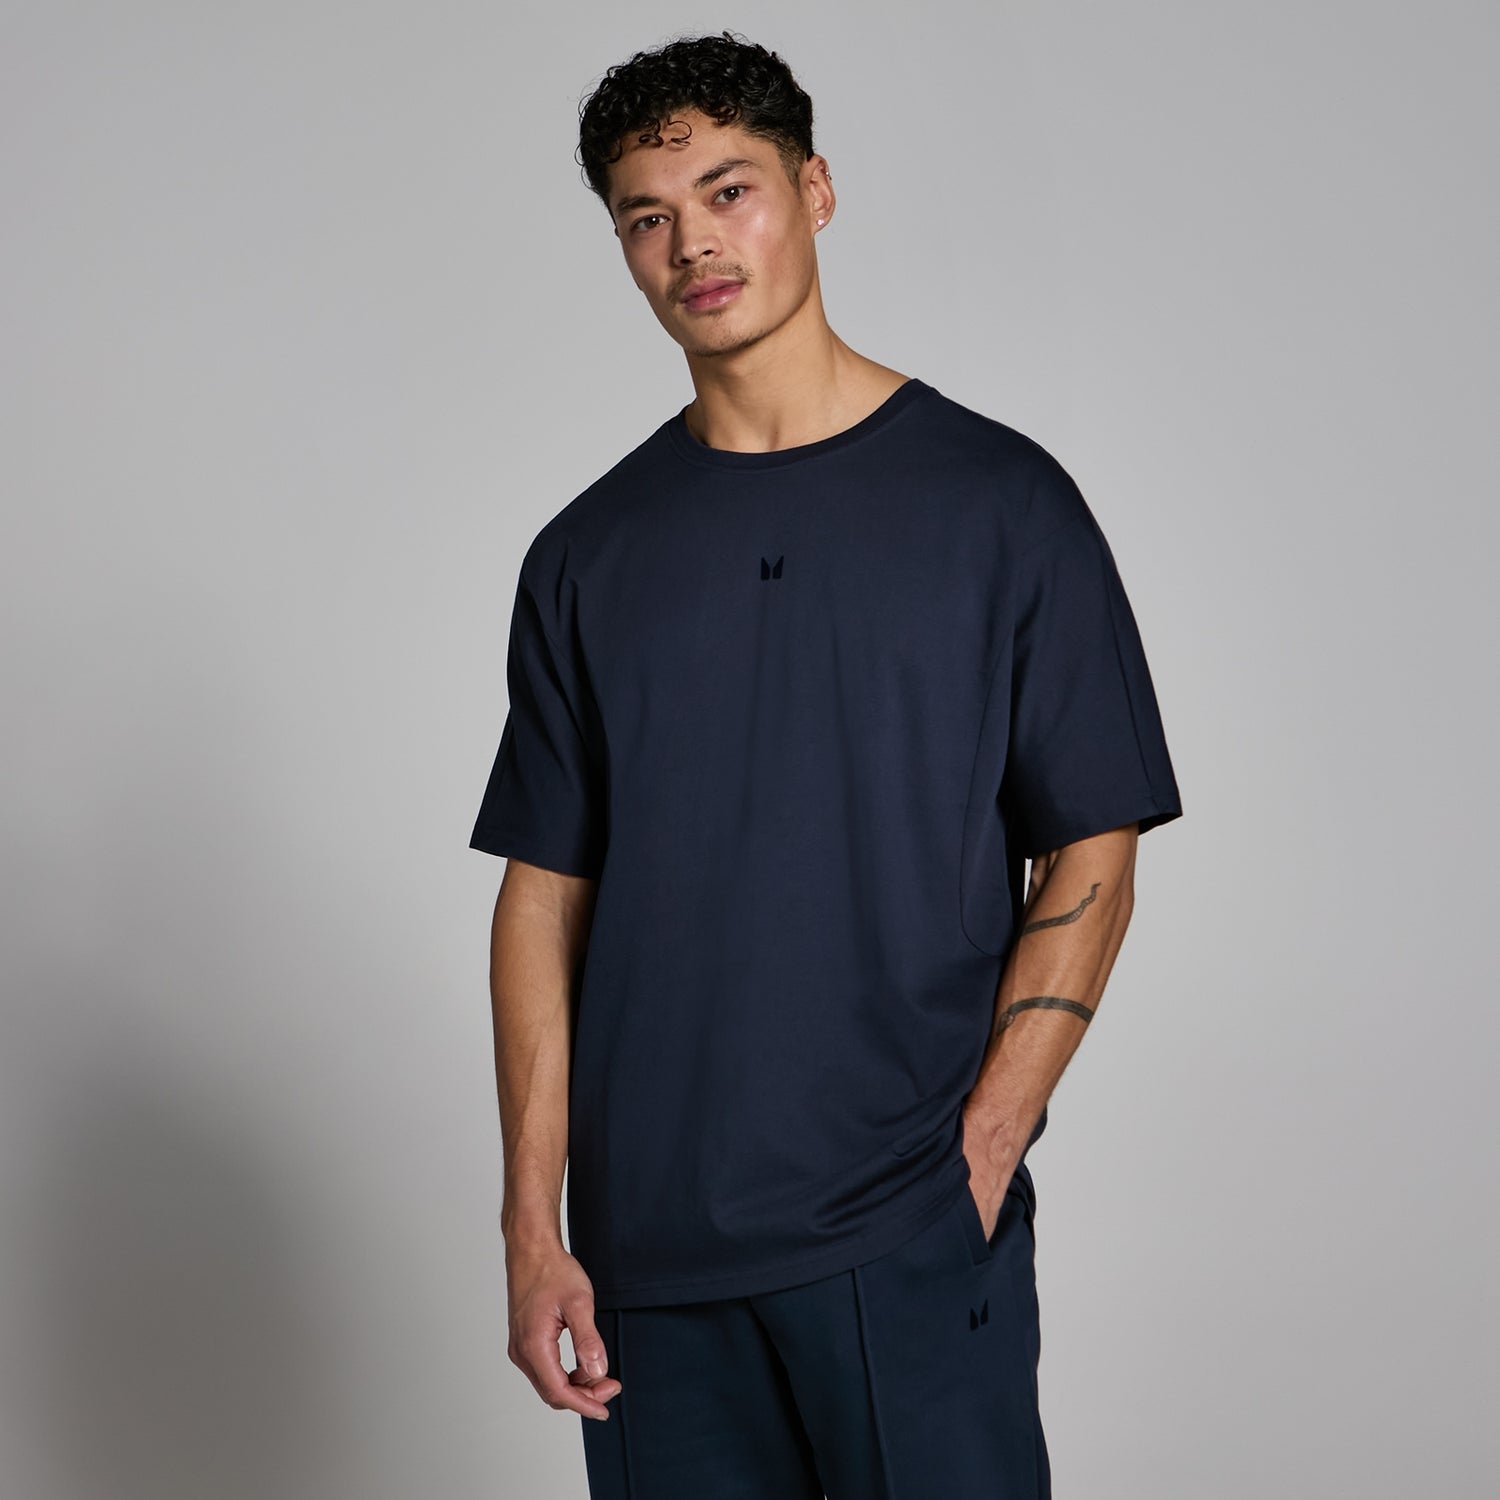 Мужская оверсайз футболка MP Lifestyle из плотной ткани — темно-синий цвет - XS